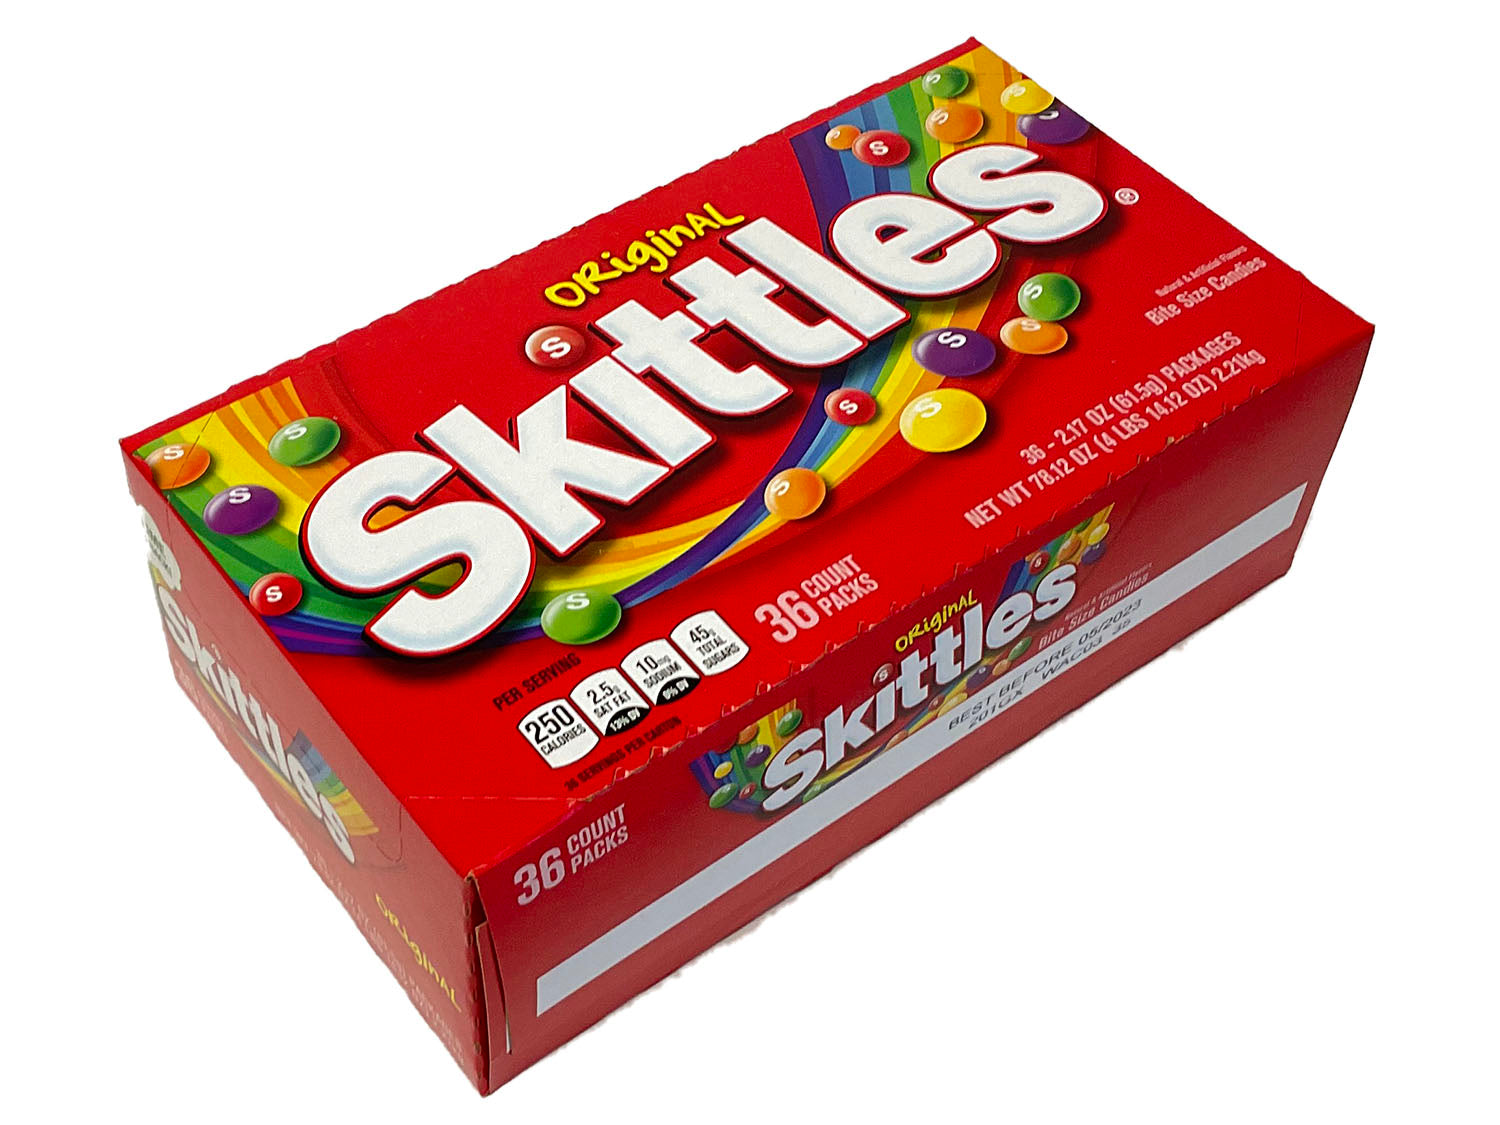 Skittles Original - 2.17 oz pkg - box of 36